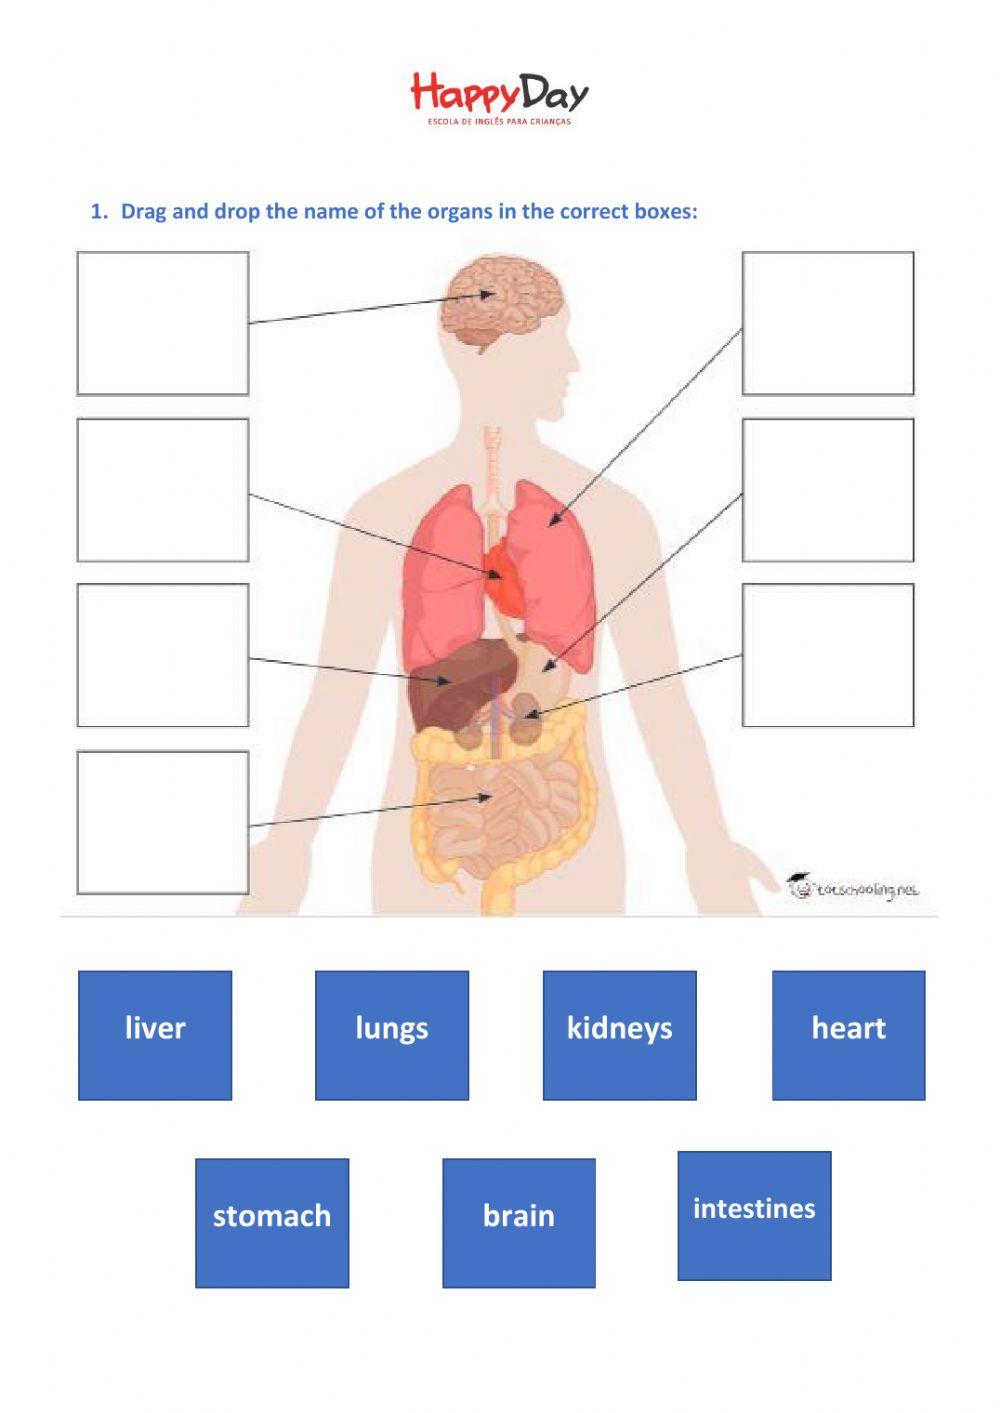 The Human Body - Internal Organs